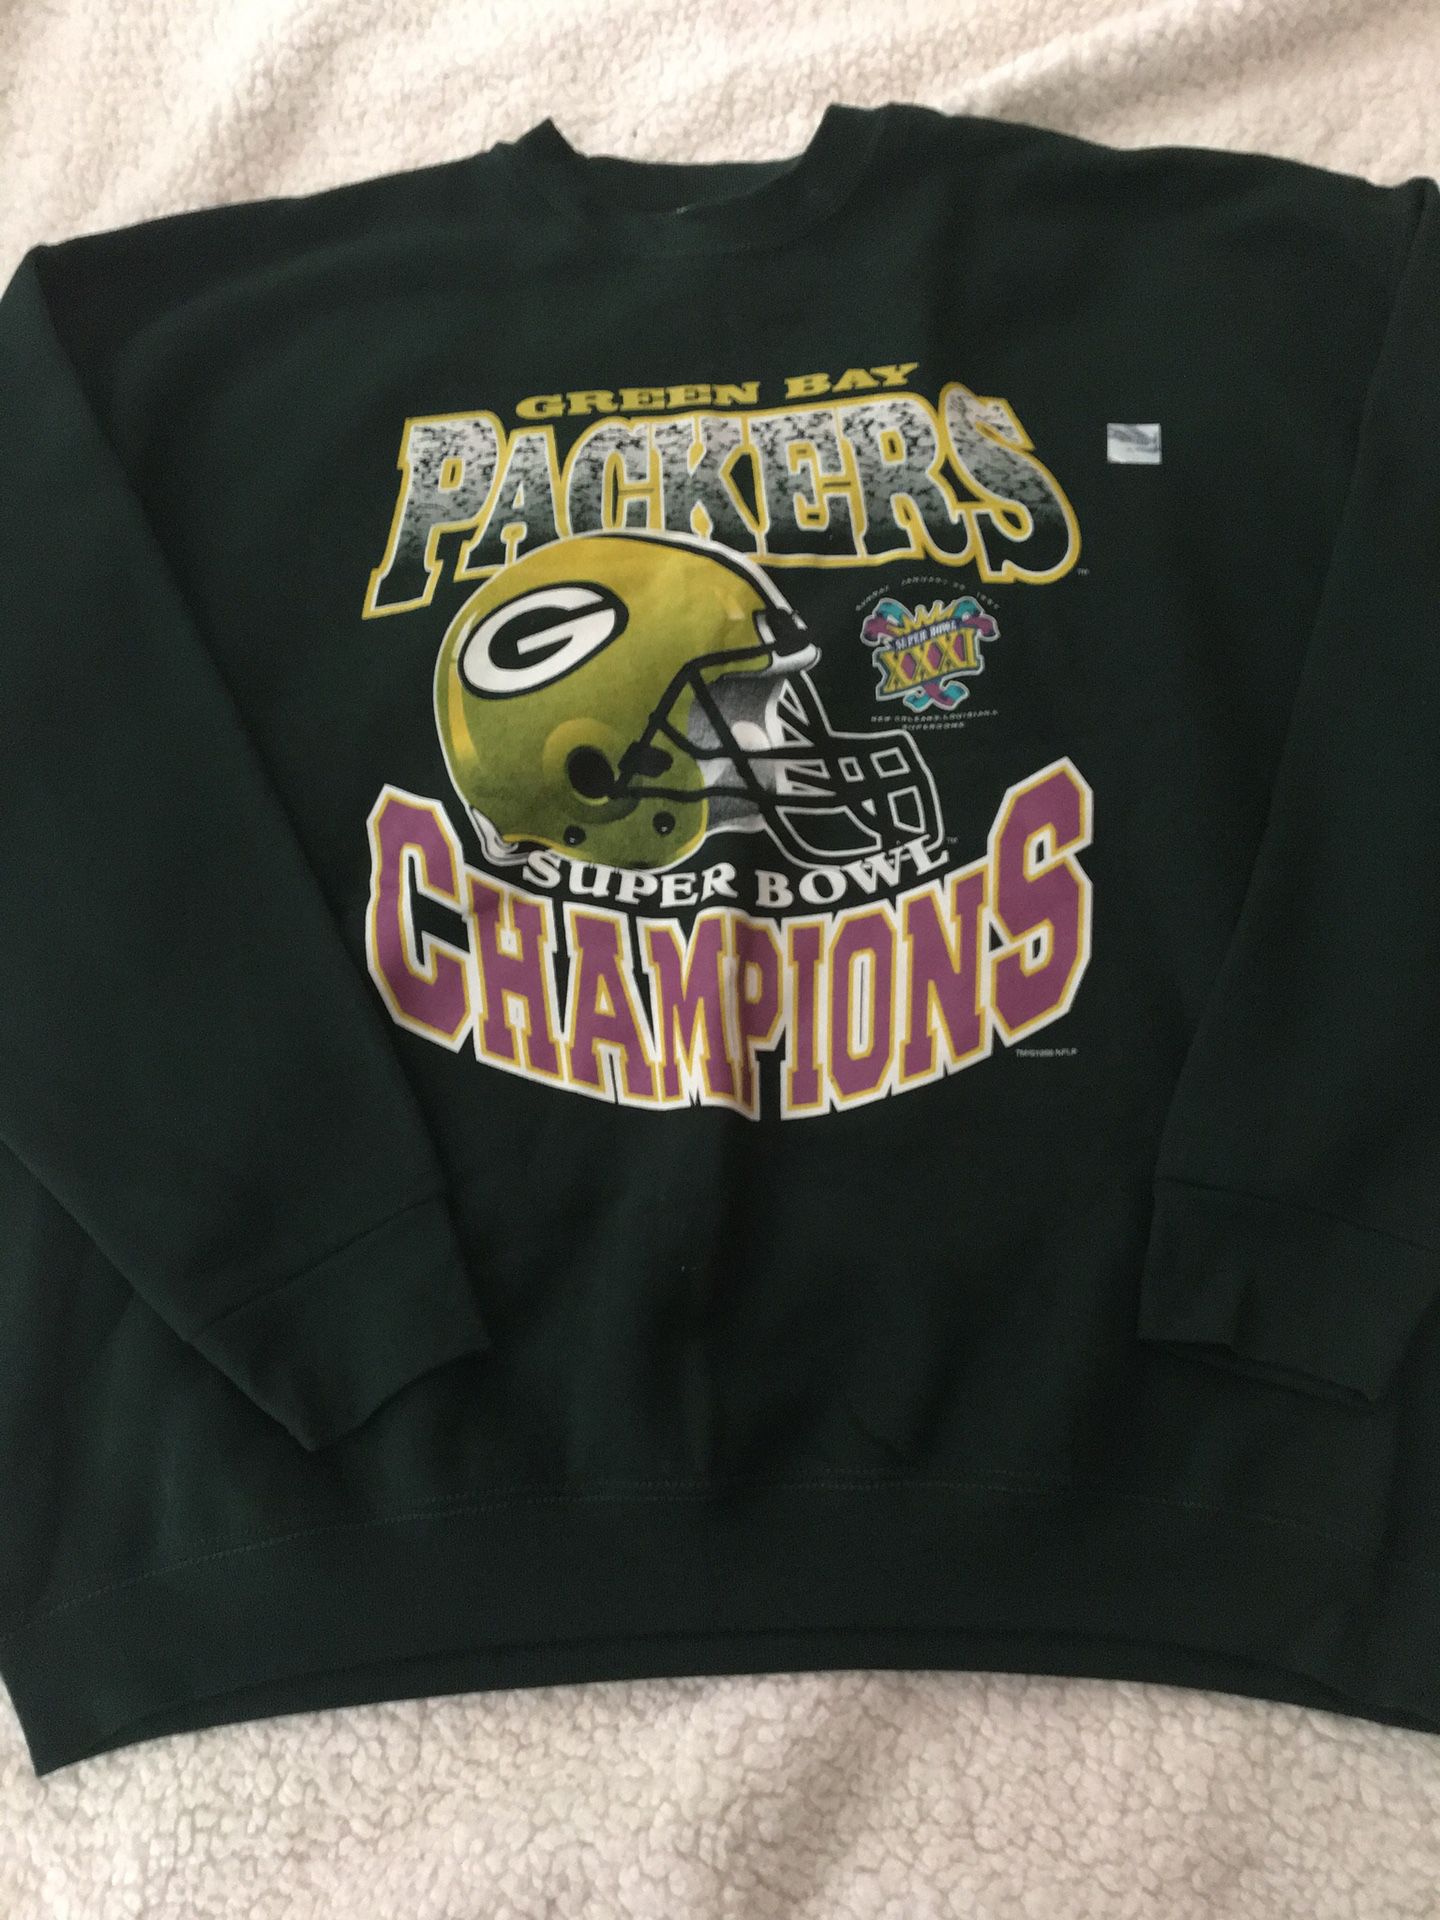 Green Bay Packers SweatShirt